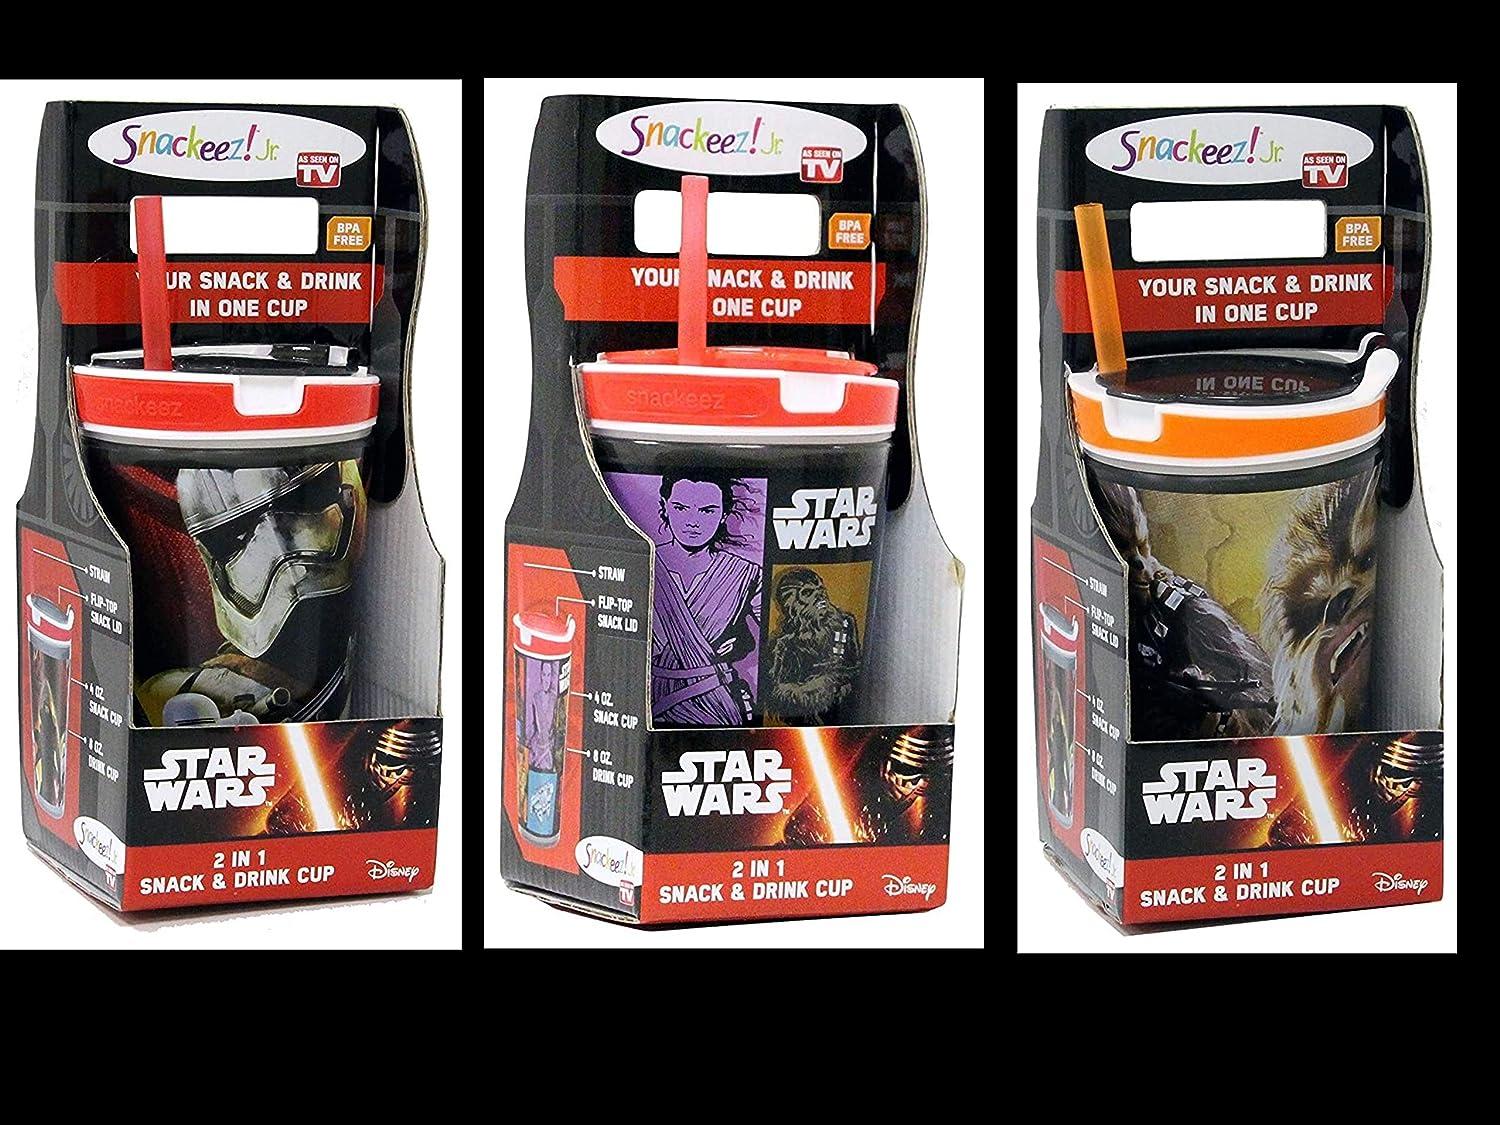 Snackeez Jr - 2-in-1 Snack & Drink Cup Star Wars 7 Movie Edition  (Single,Assorted), 1 - Kroger